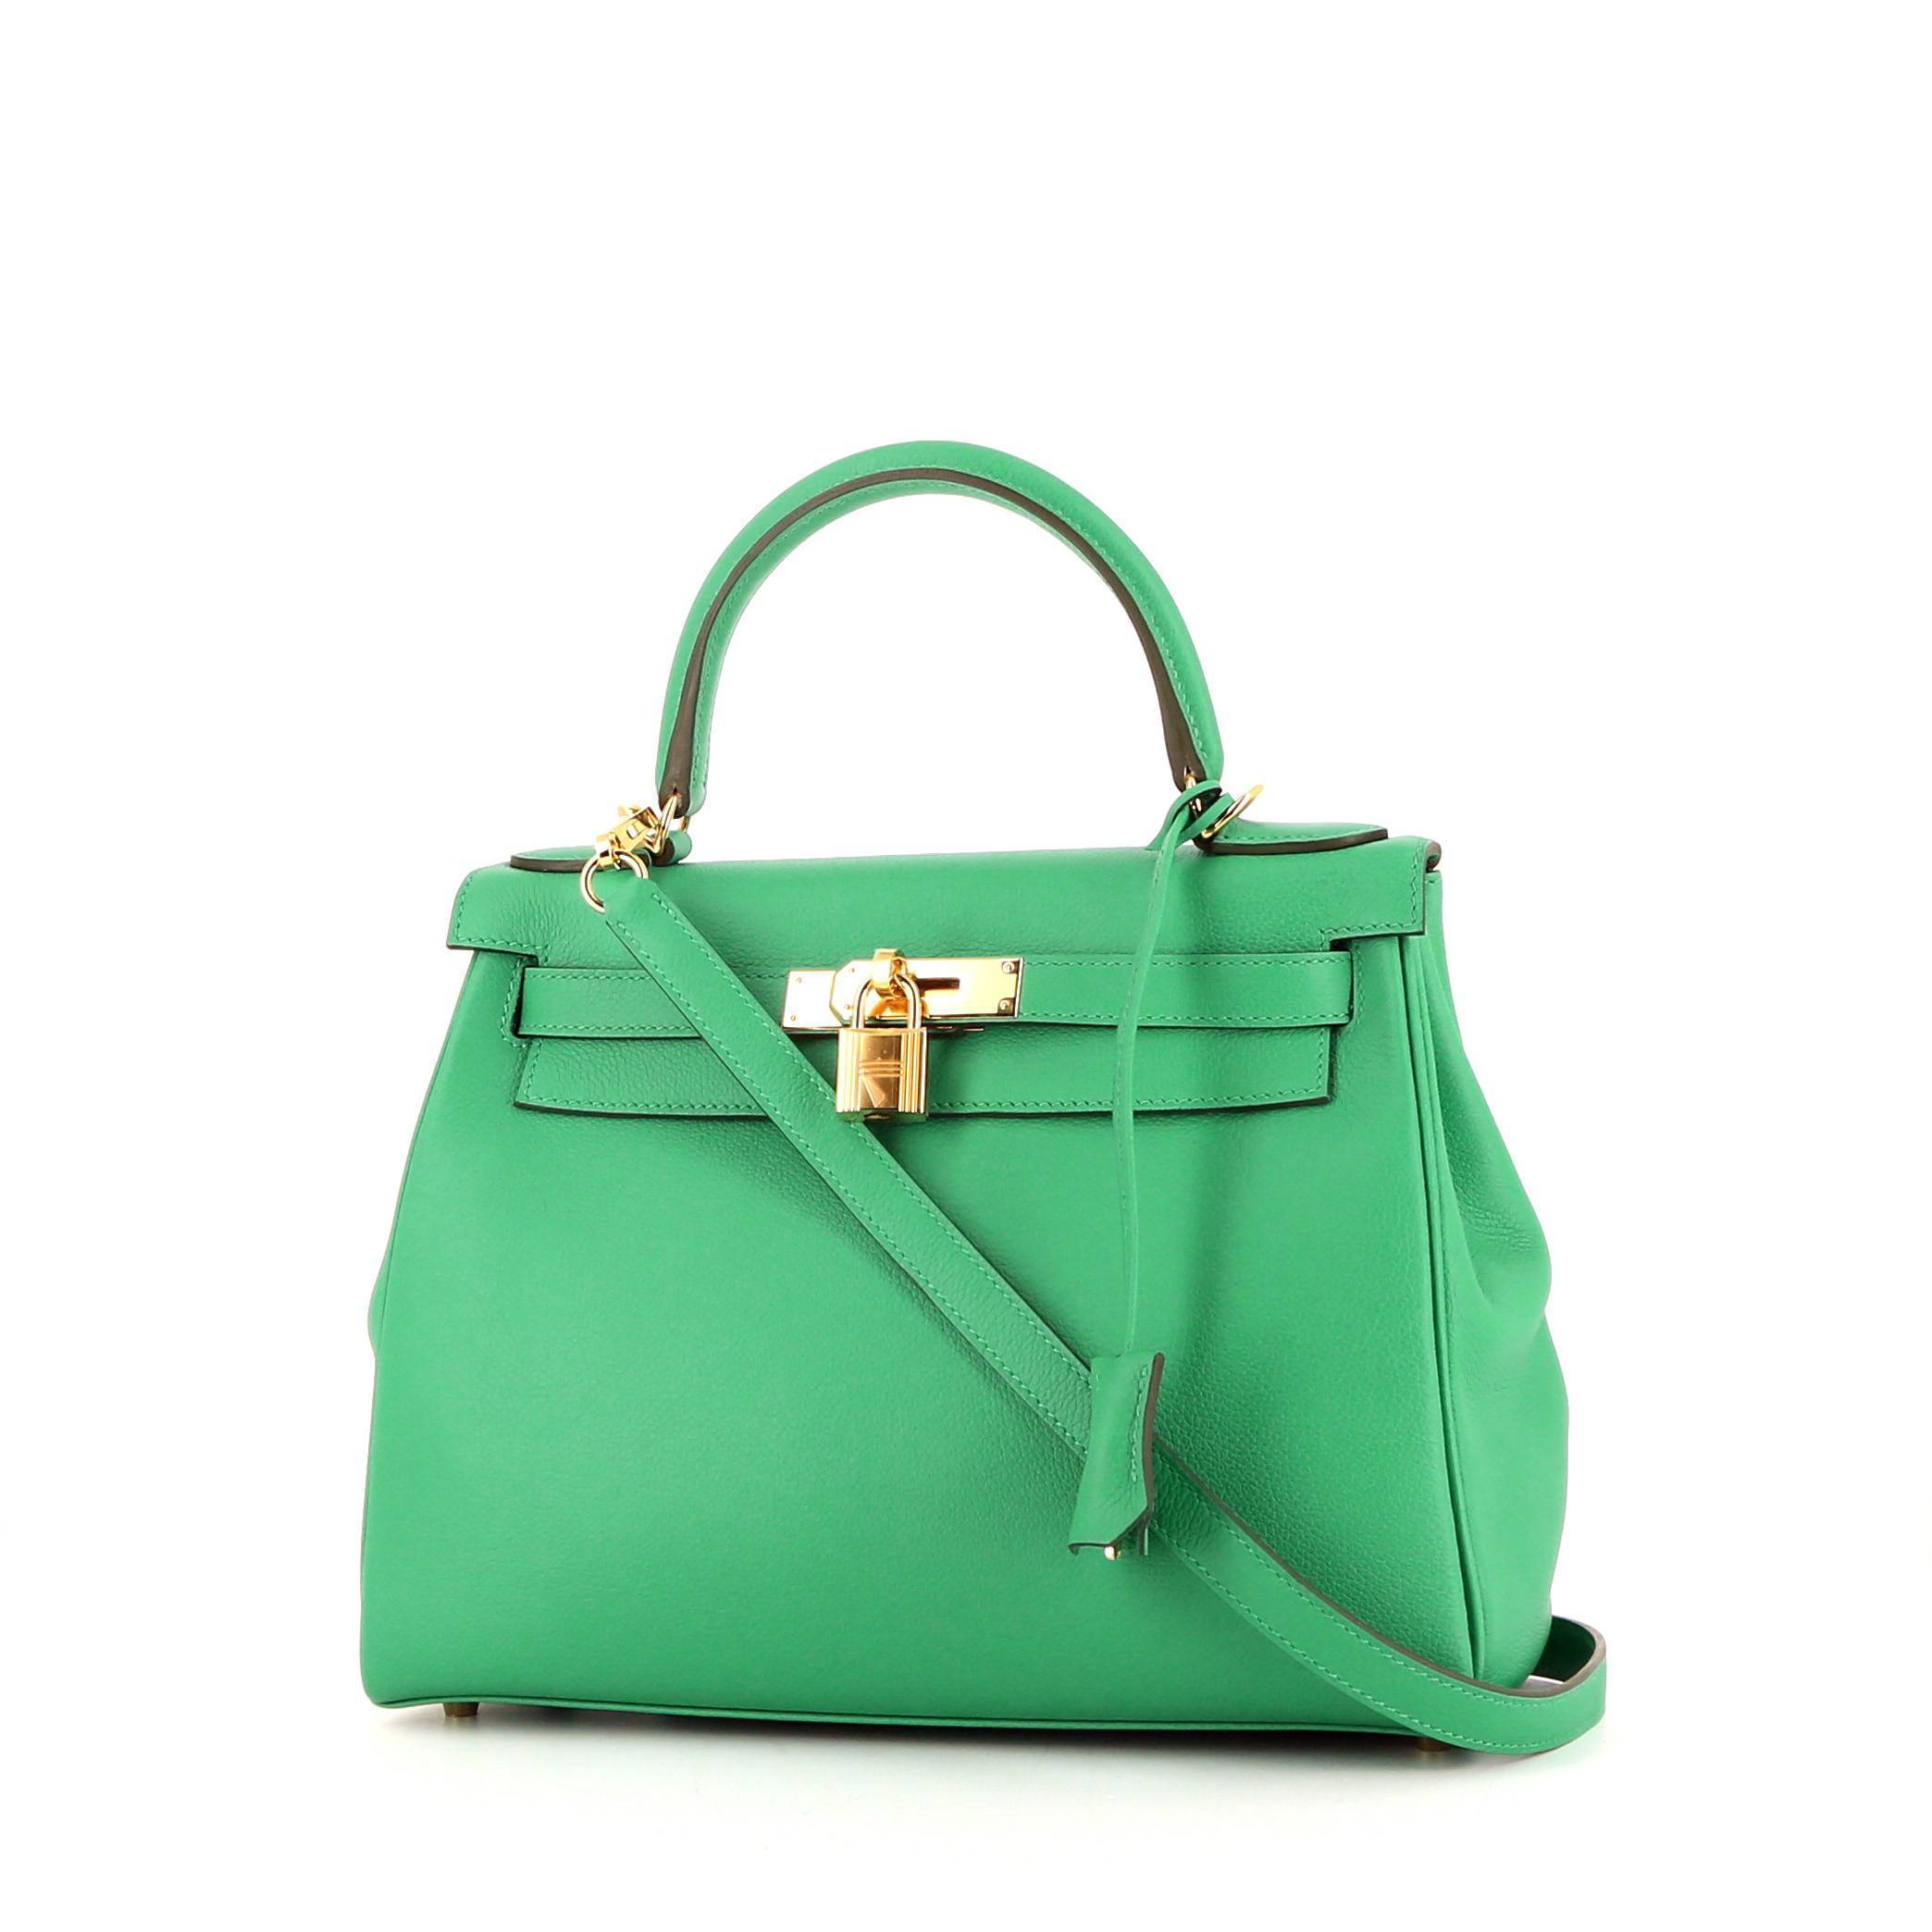 Hermès  Kelly 28 cm handbag  in green togo leather - 00pp